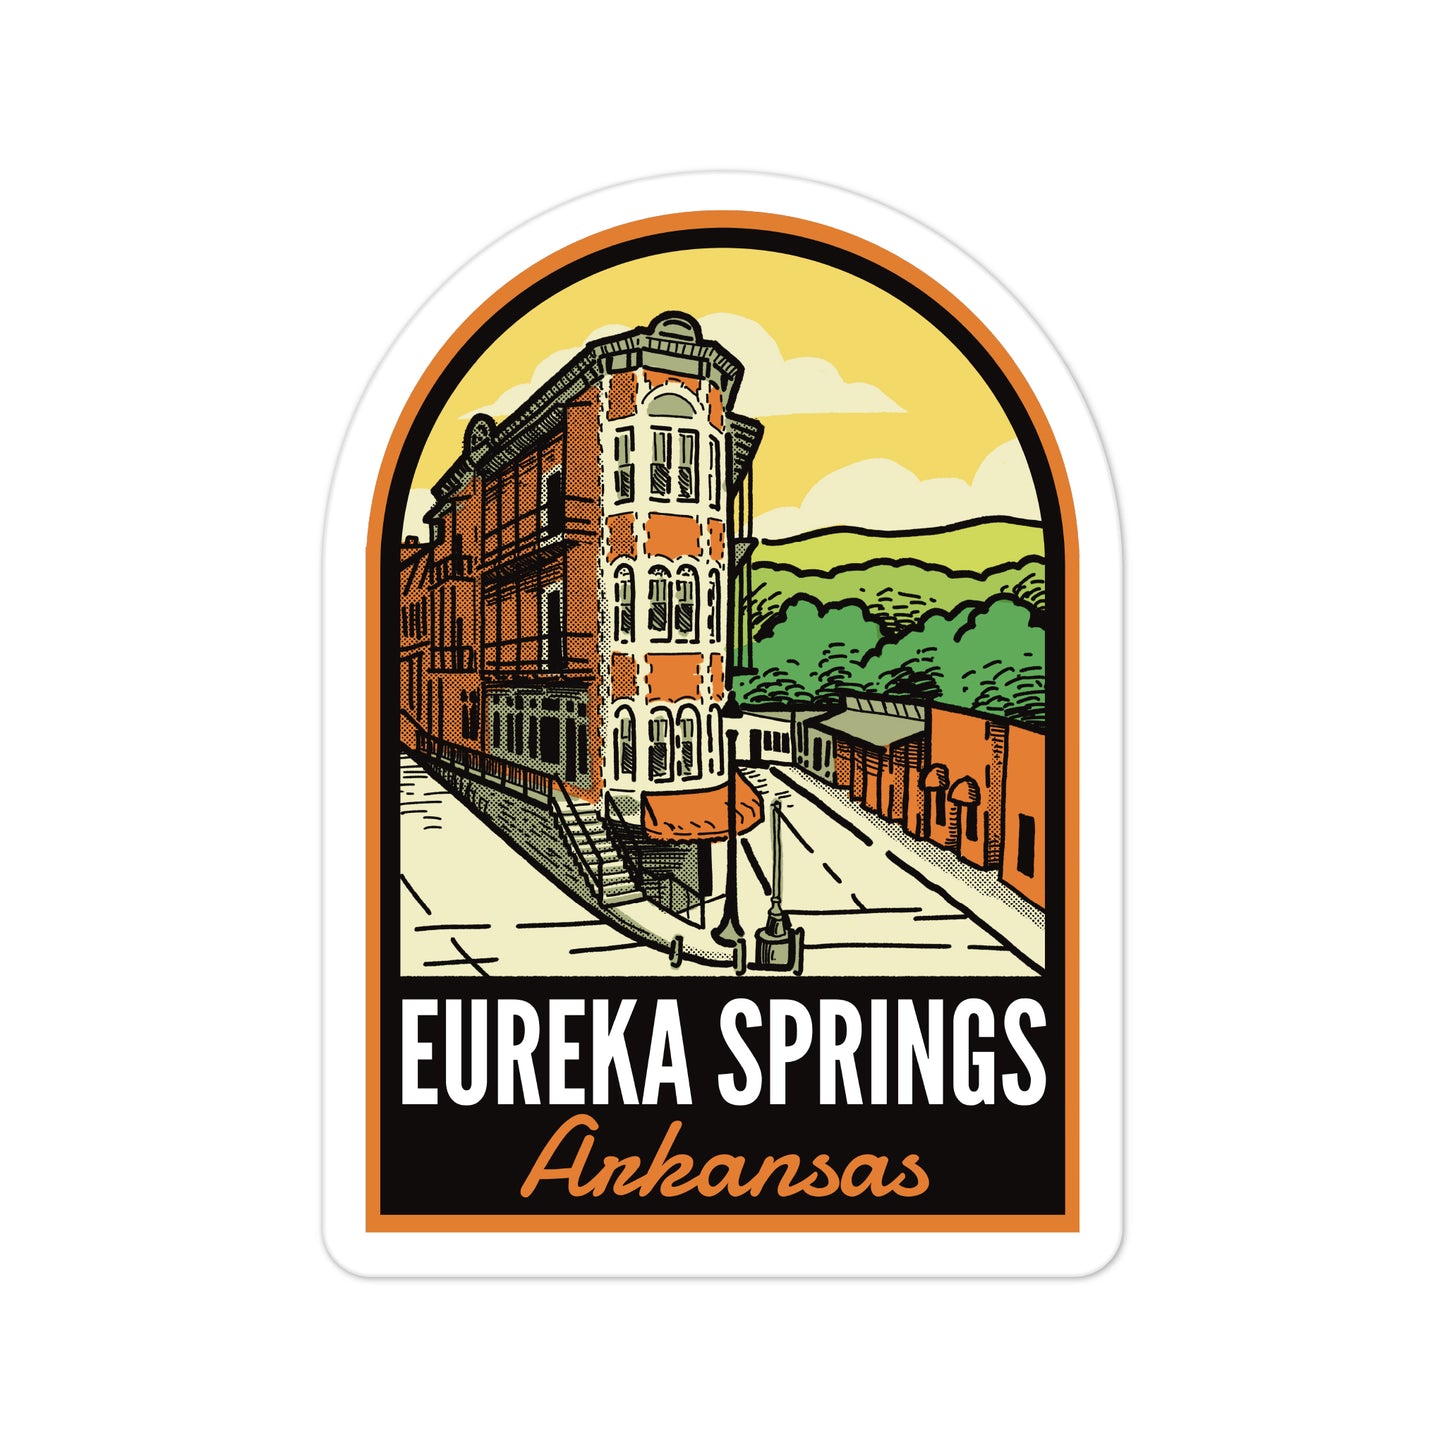 A sticker of Eureka Springs Arkansas